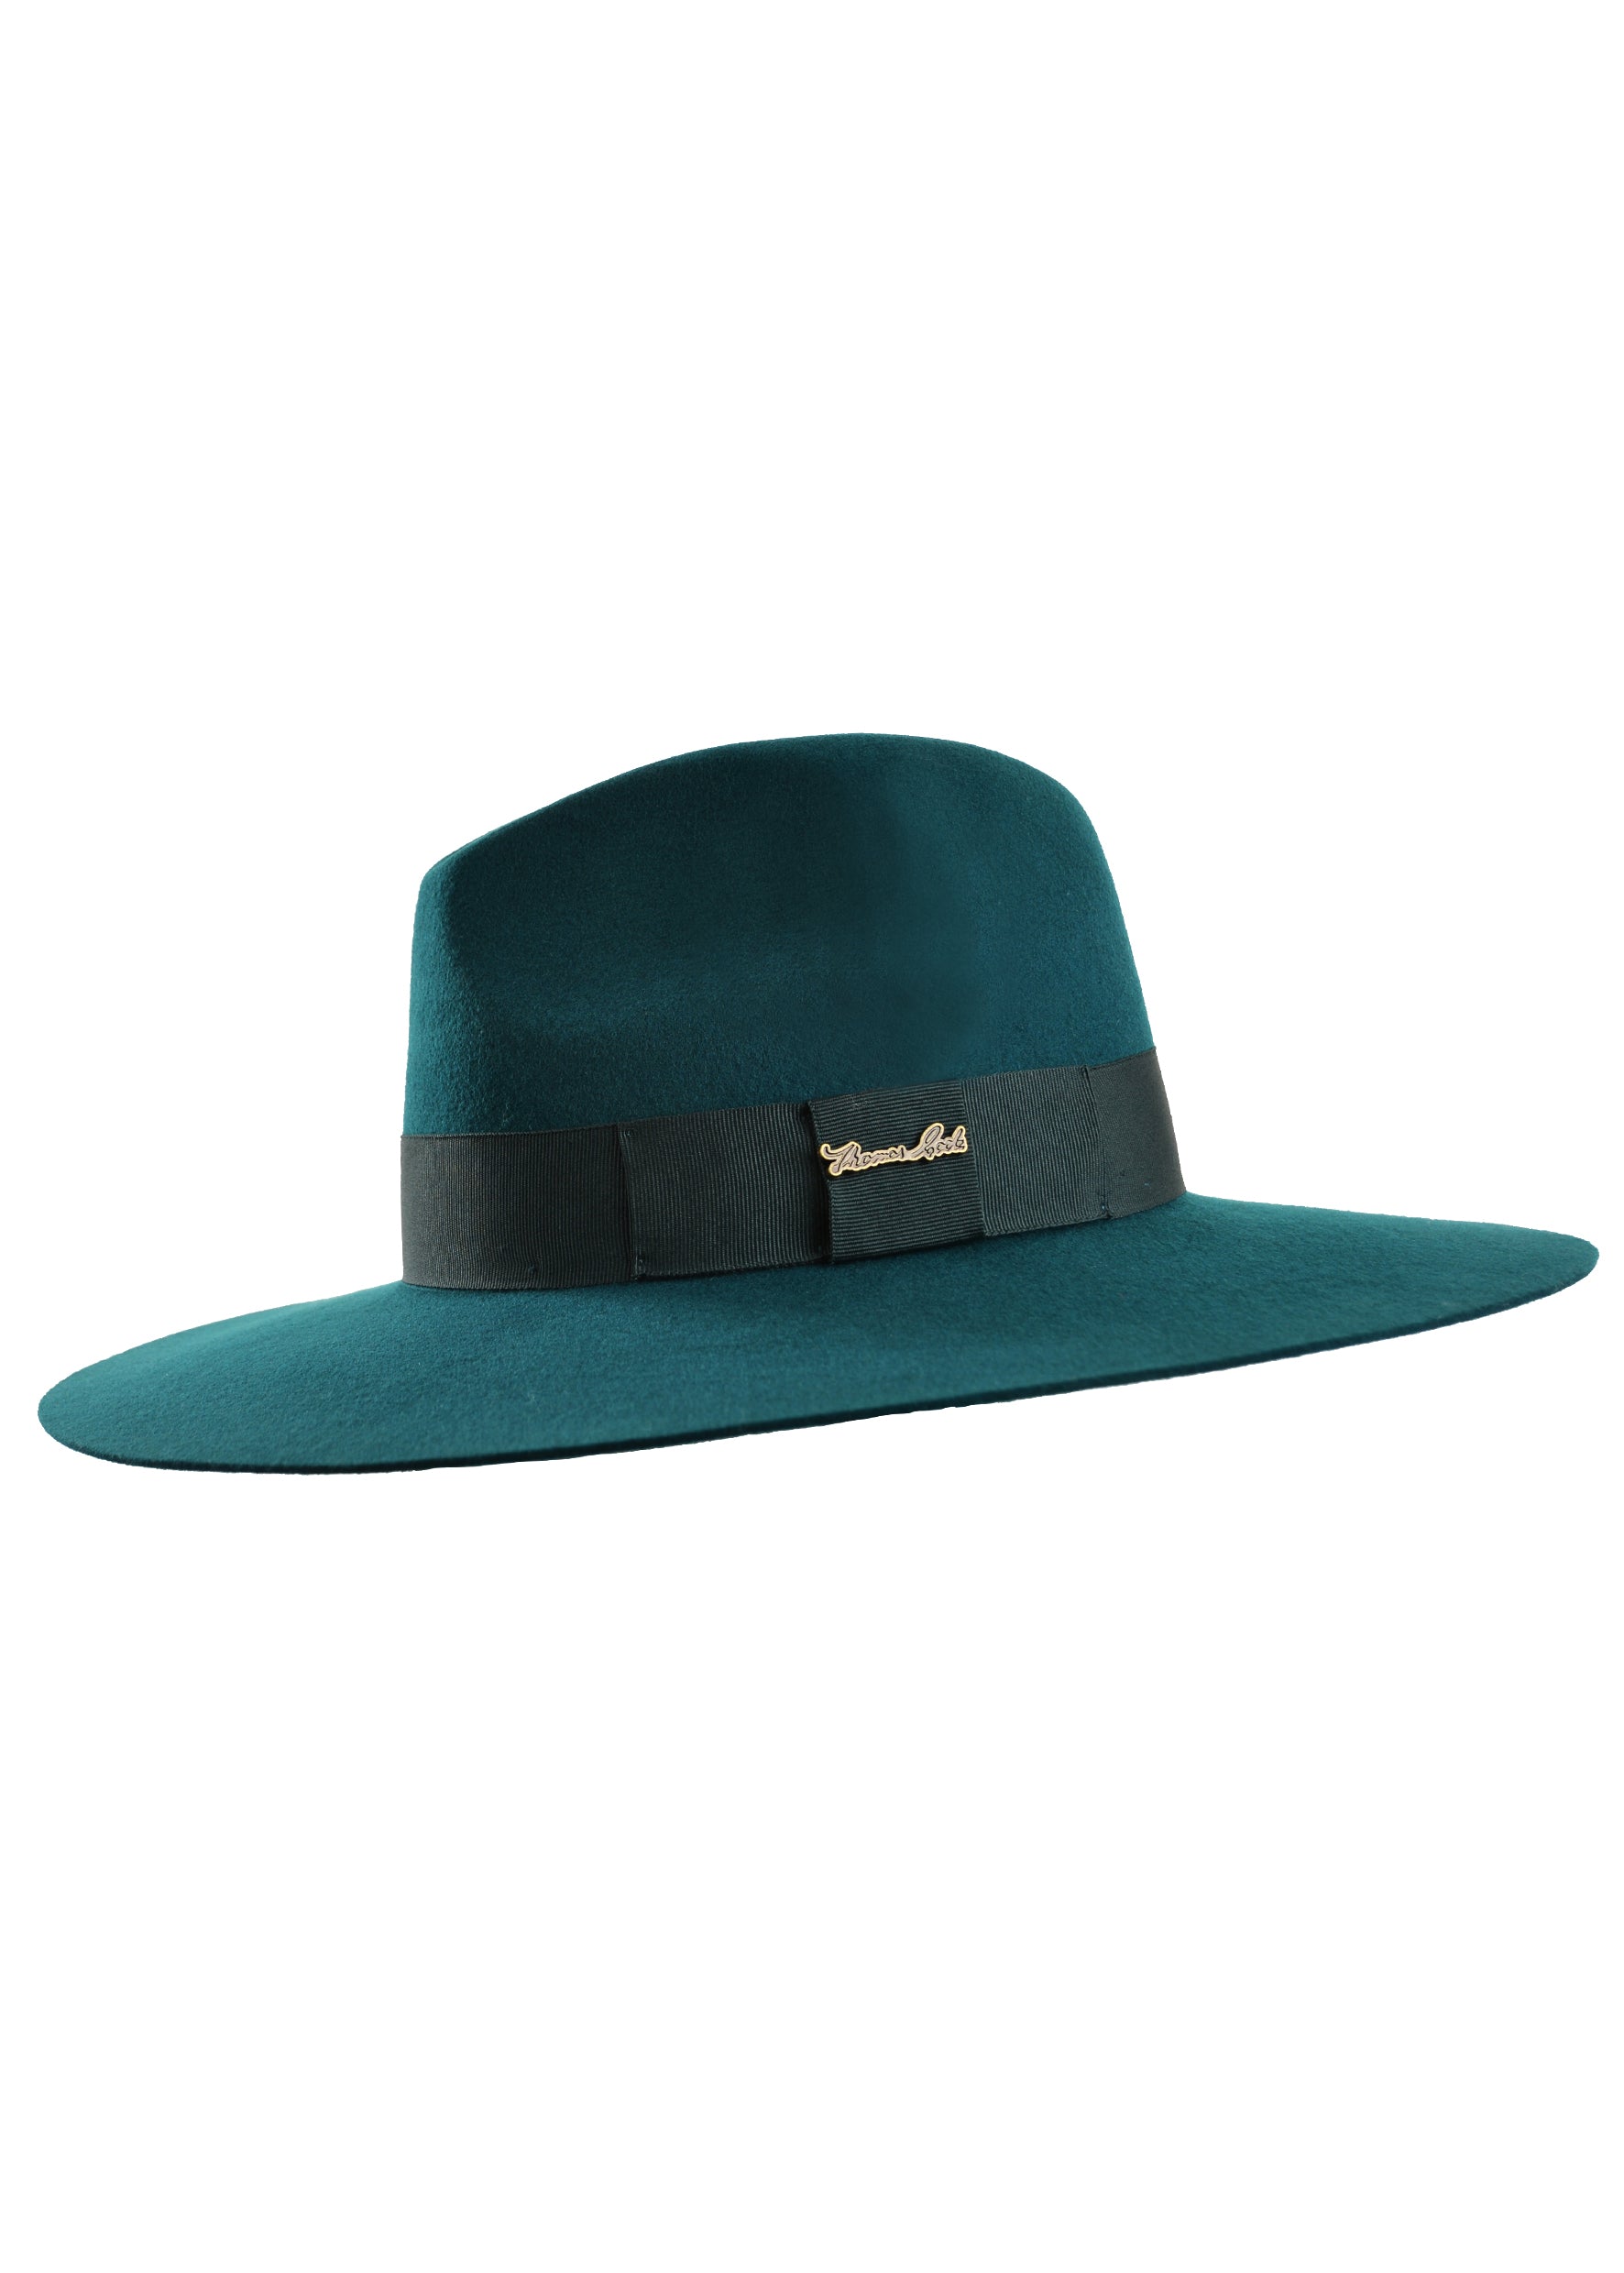 Thomas Cook Augusta Wool Felt Hat